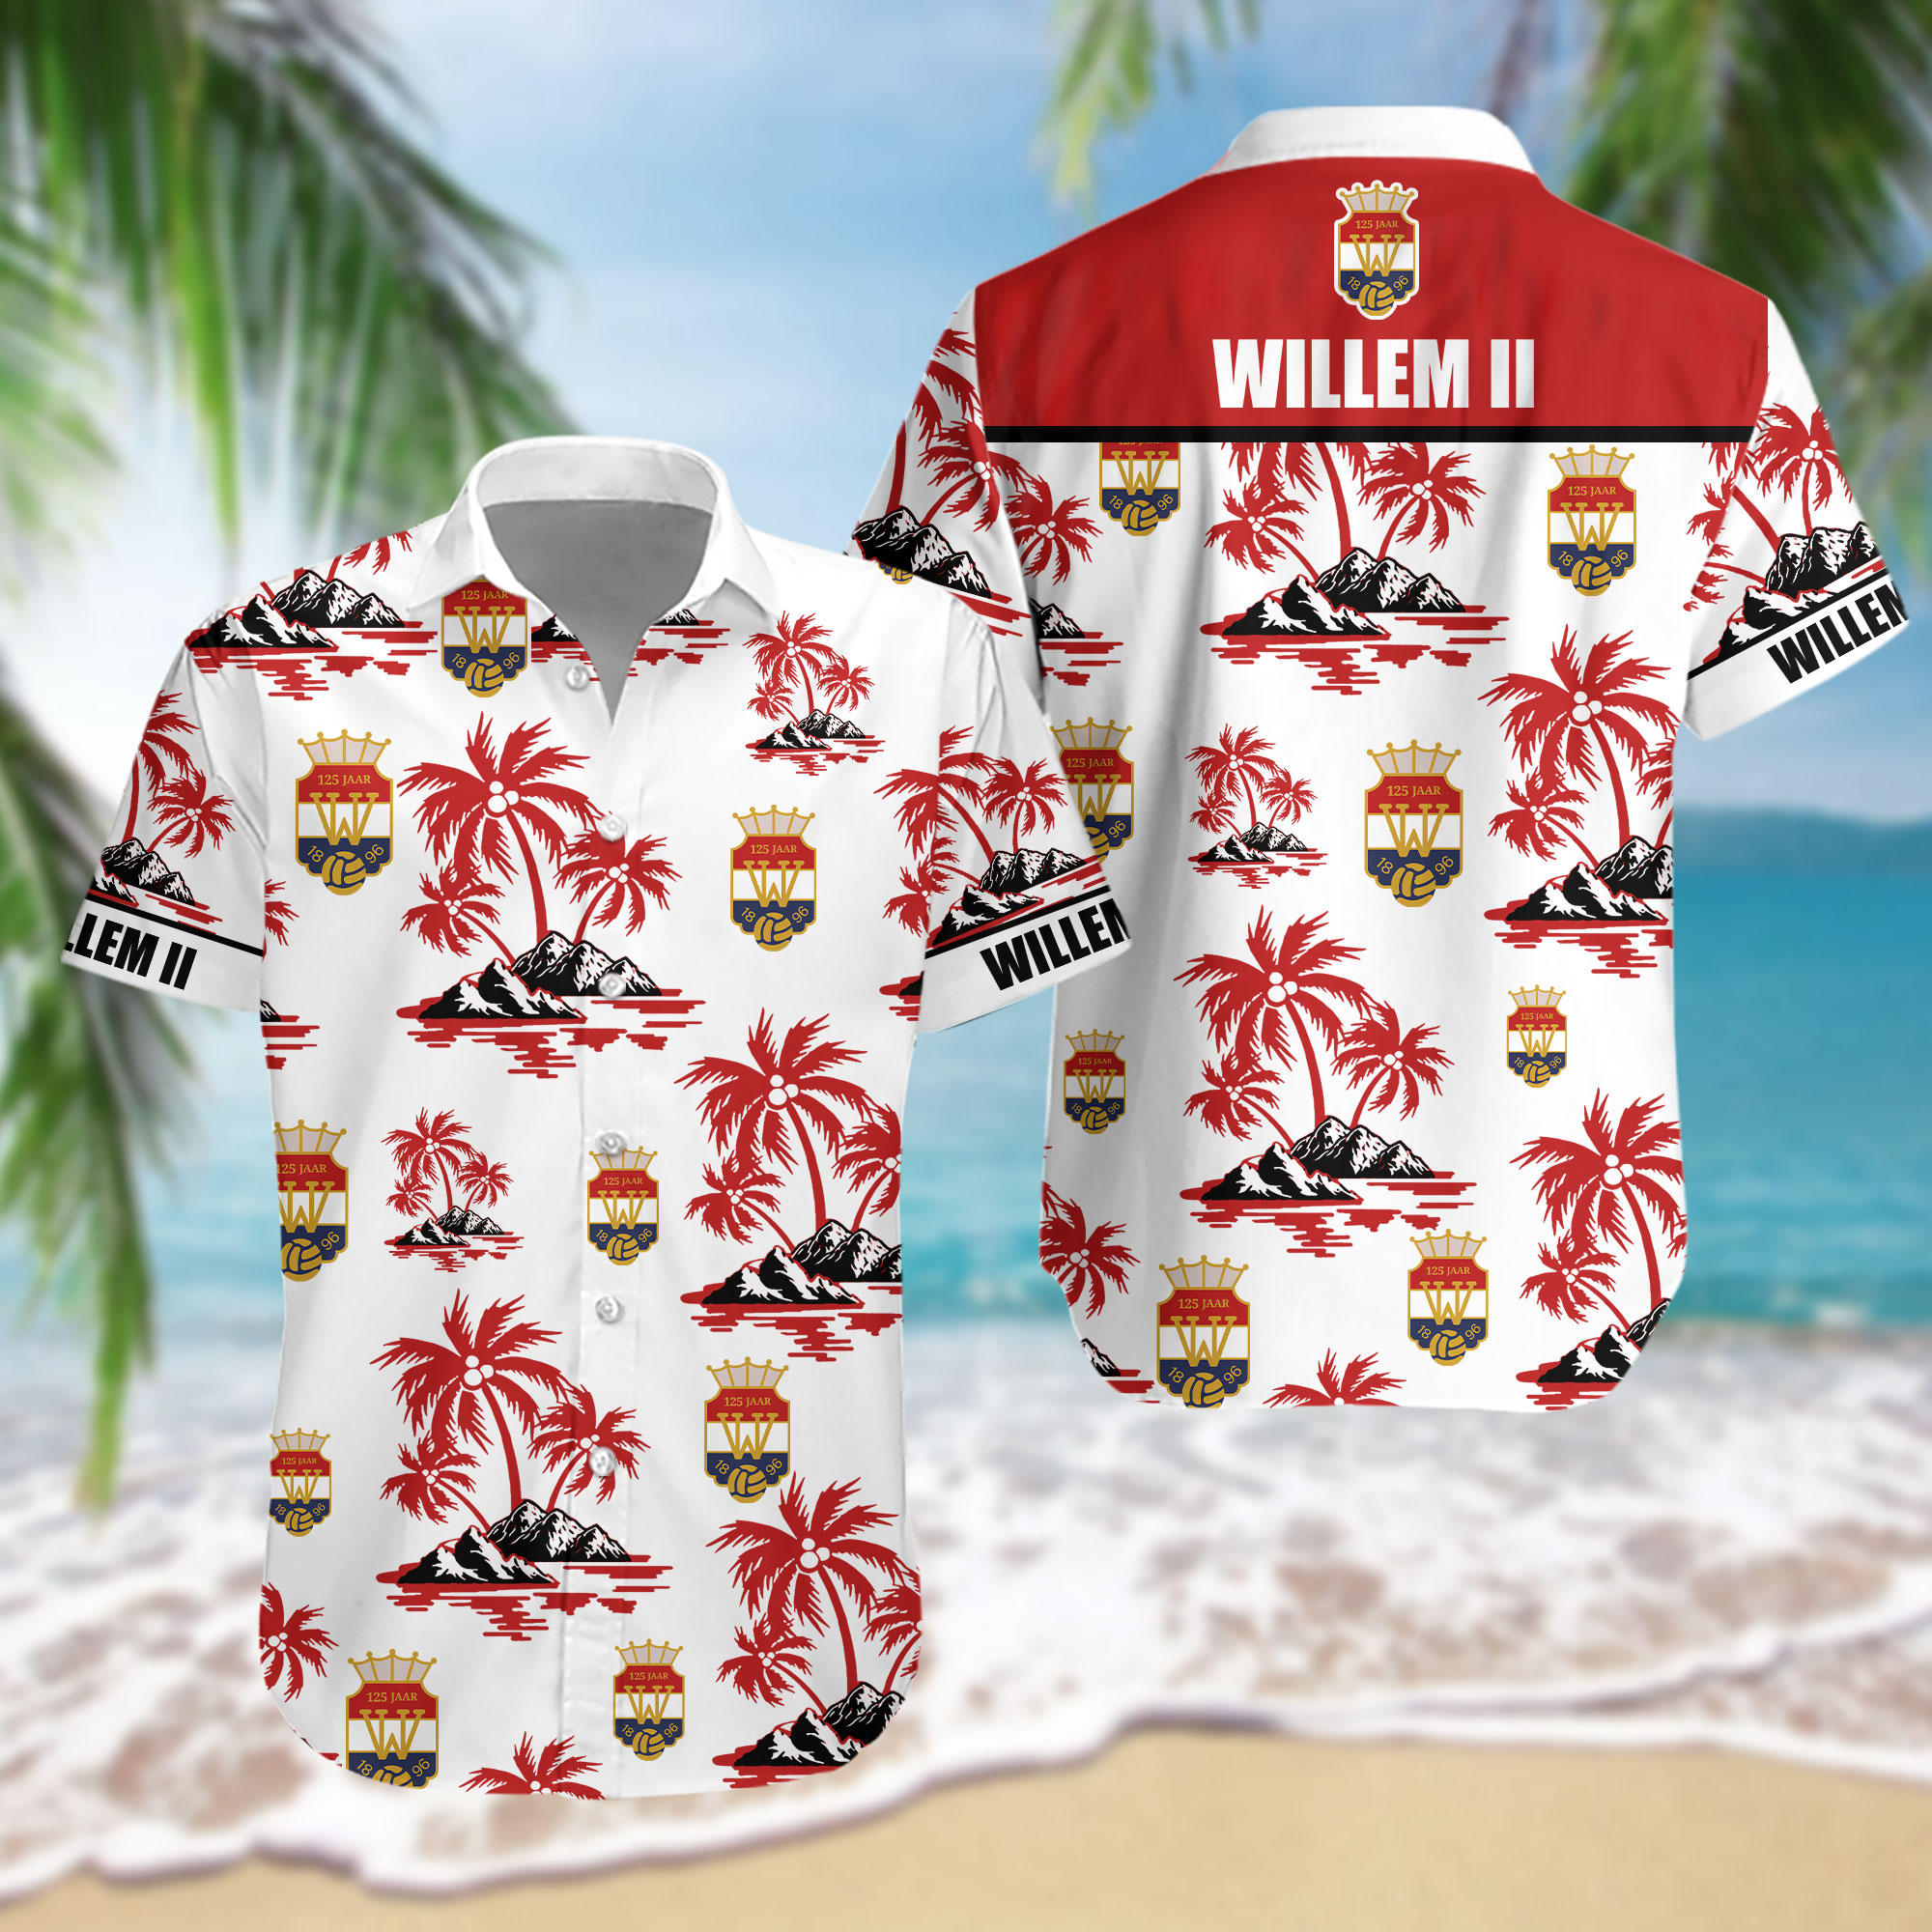 HOT Eredivisie Willem II Tilburg FC Tropical Shirt2